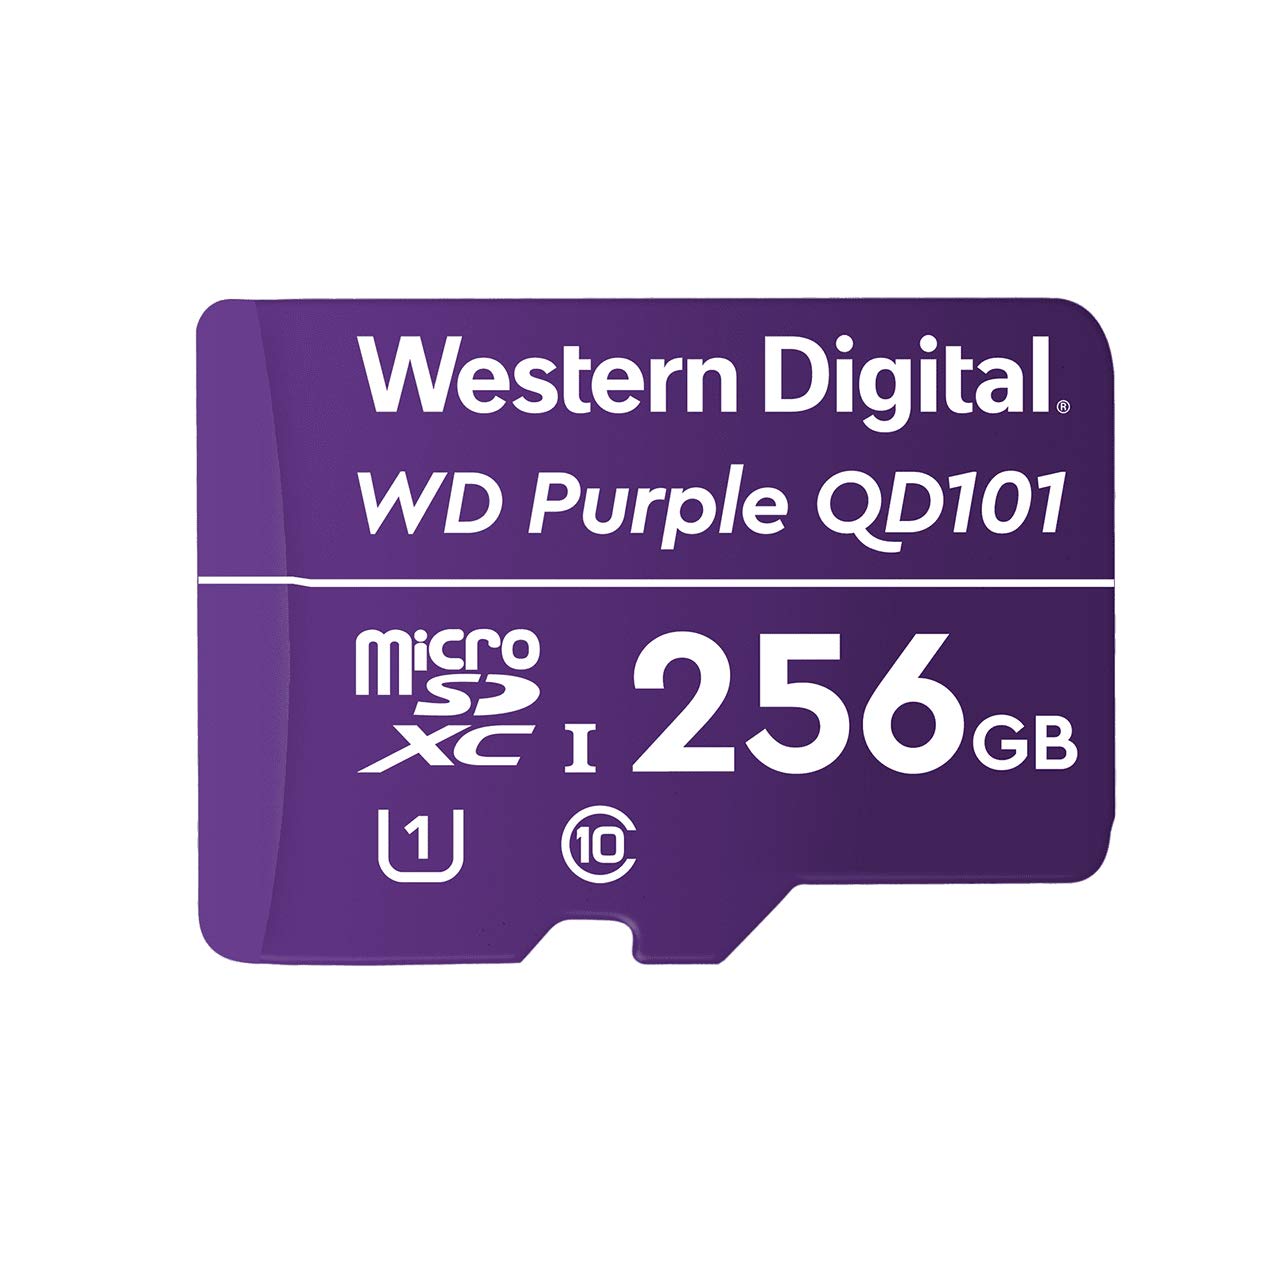 Western Digital ウエスタンデジタル WD Purple microSD カード 256GB SC QD101 SDXC UHS-I 連続録画 監視カメ